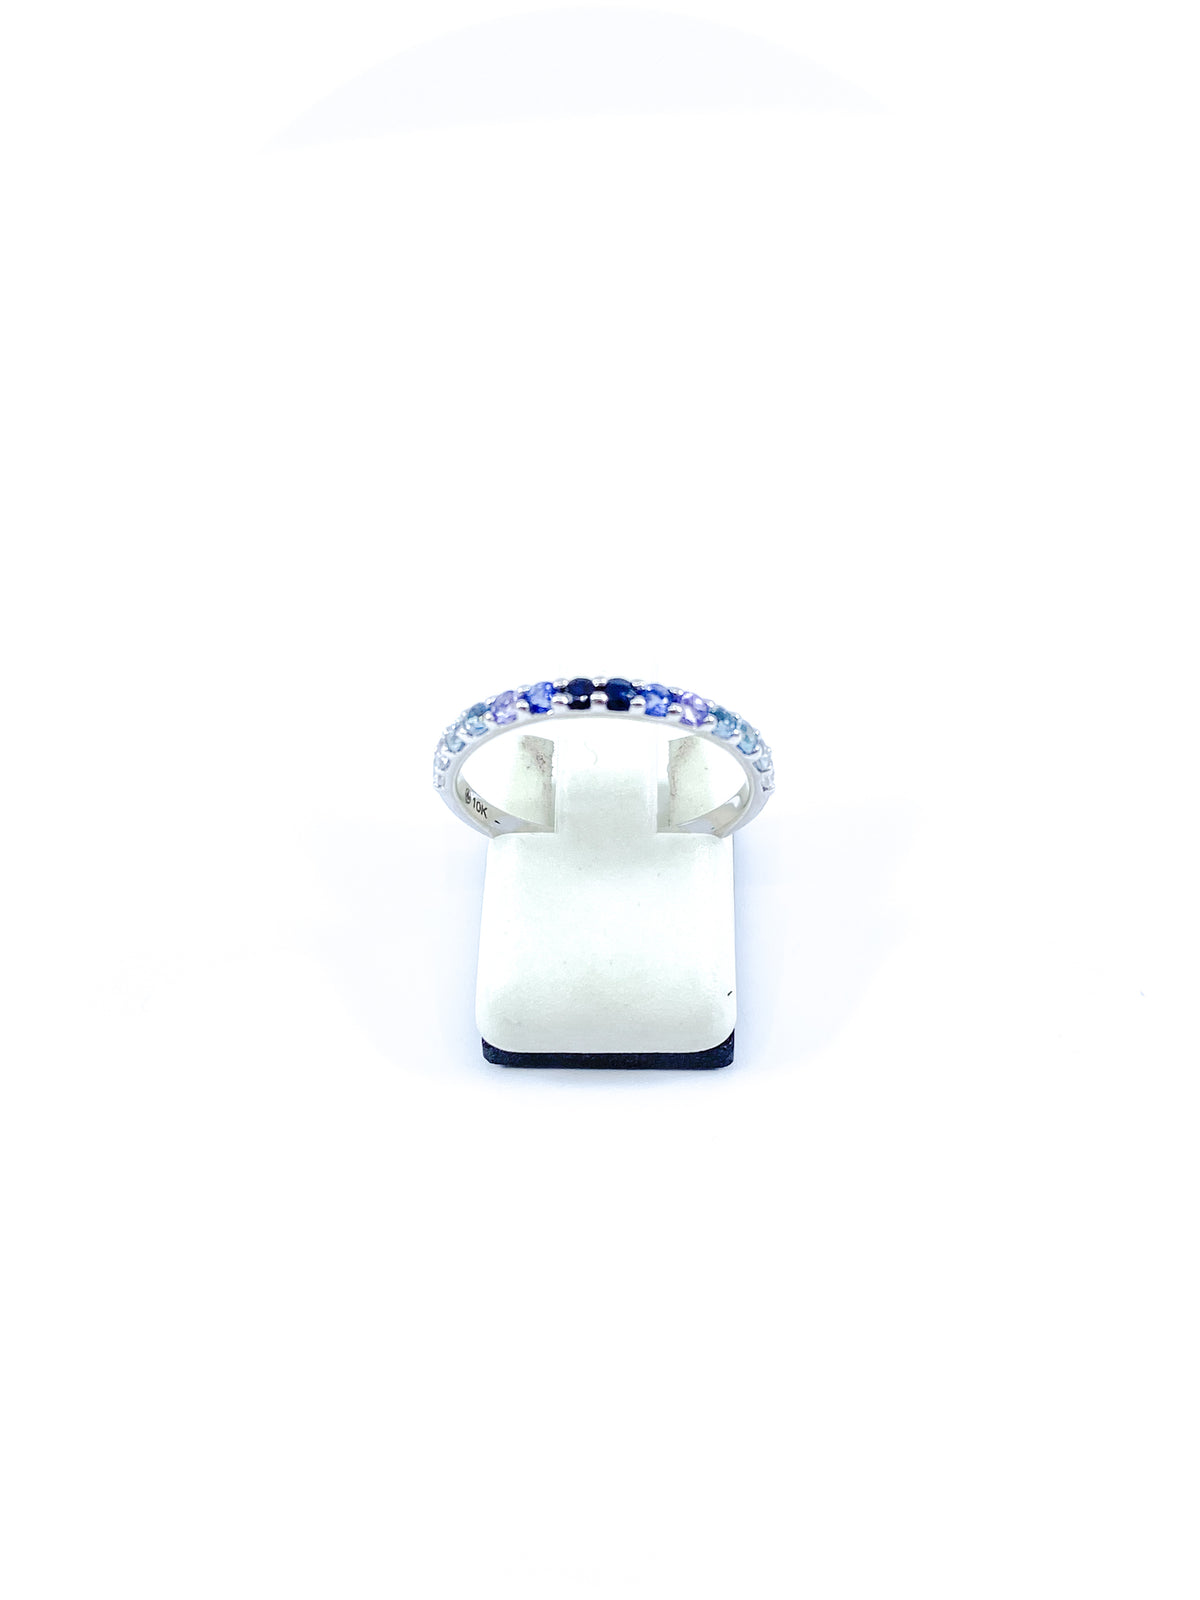 10K White Gold Genuine 2mm White Zircon, Aquamarine, Blue Zircon, Blue Topaz, Tanzanite, Ceylon Sapphire and Sapphire Gemstone Ring, size 6.5